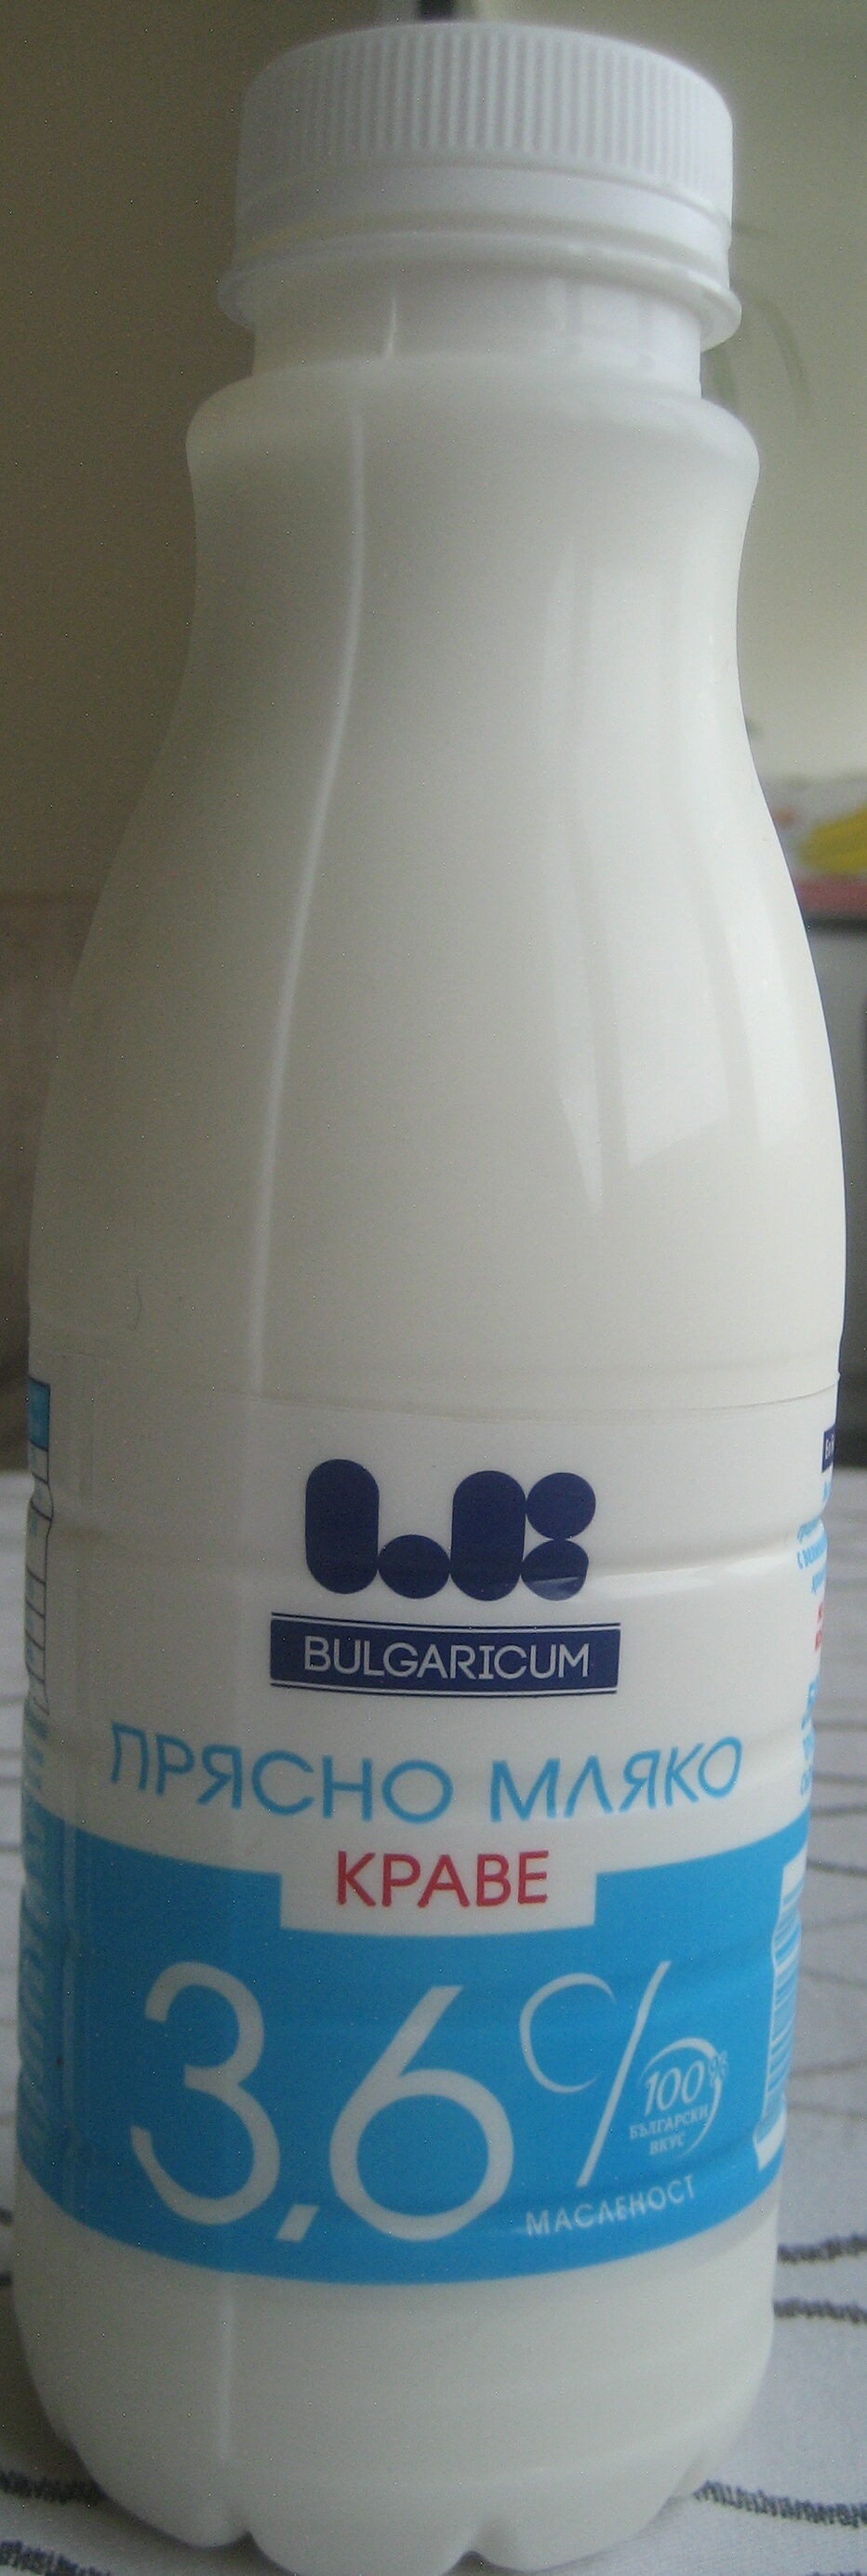 Прясно краве мляко 3,6% - Produit - bg